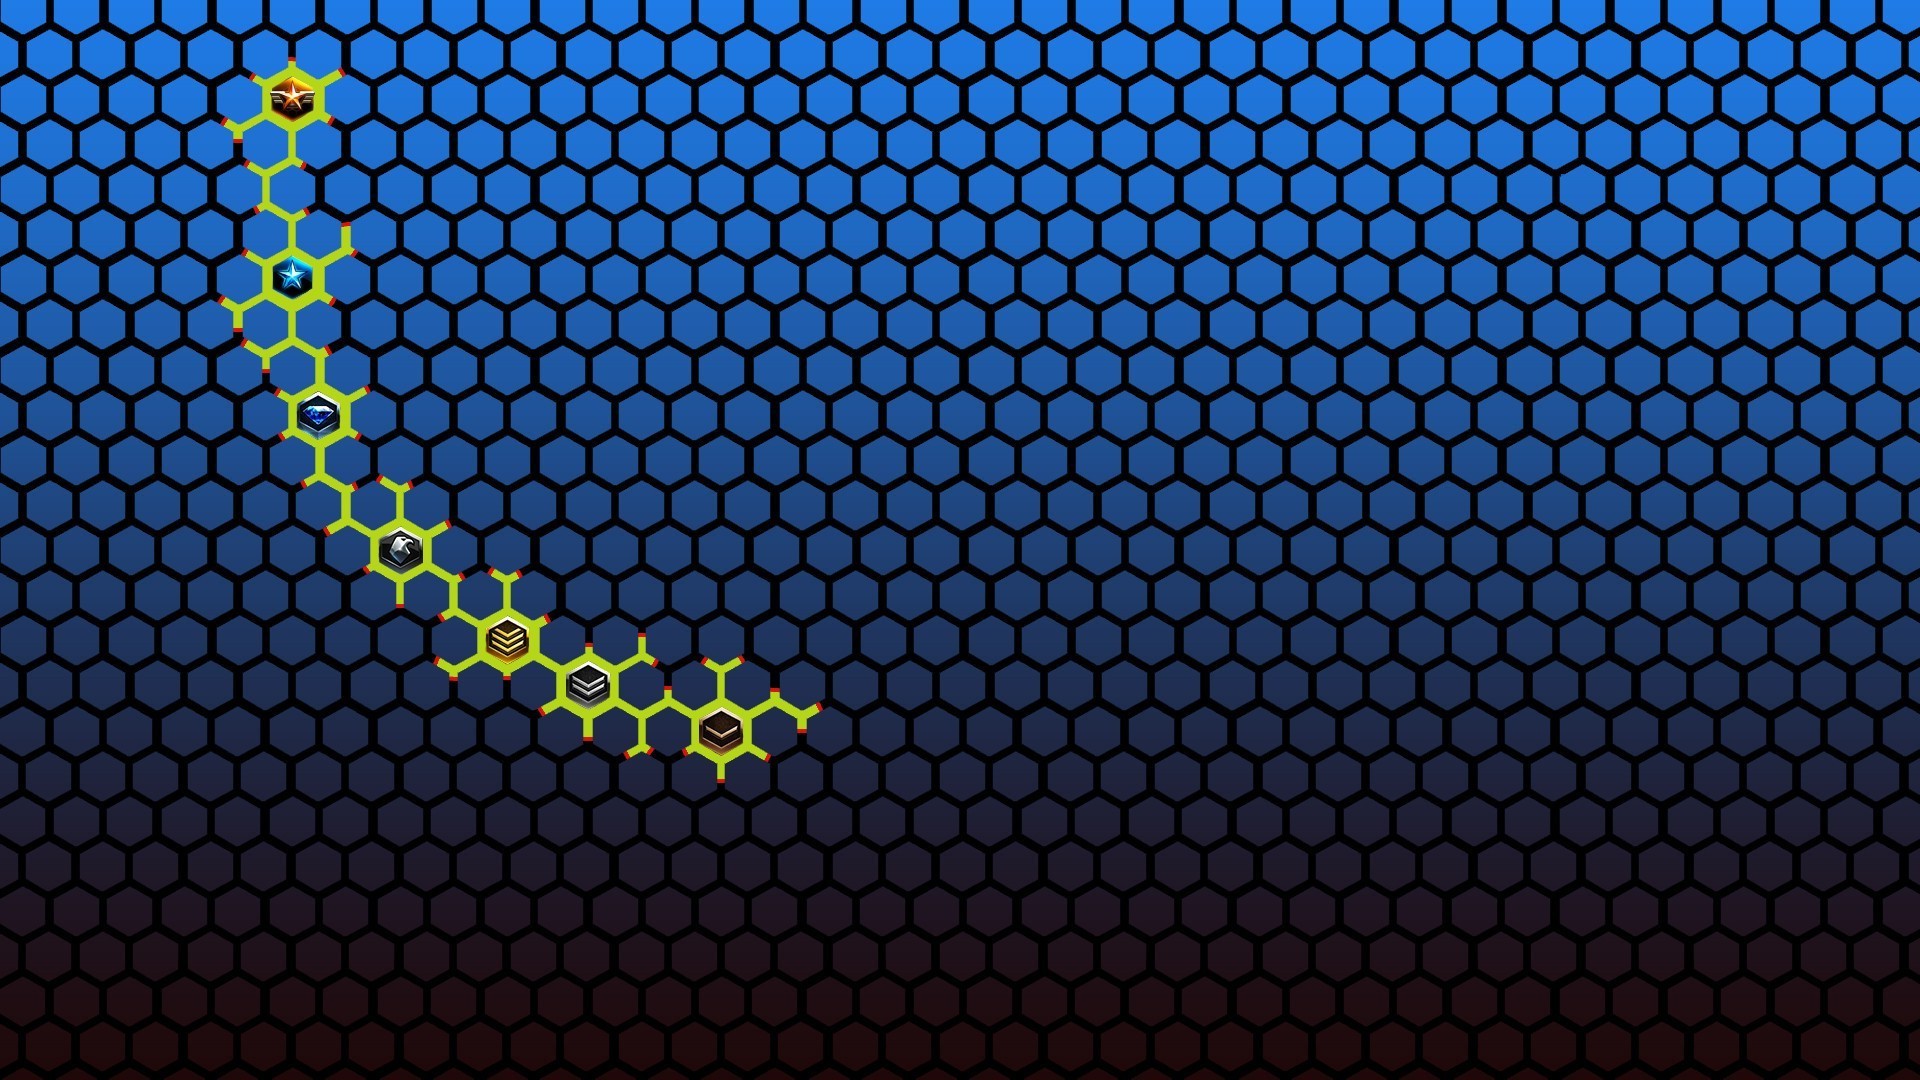 Starcraft II, Hexagon Wallpaper